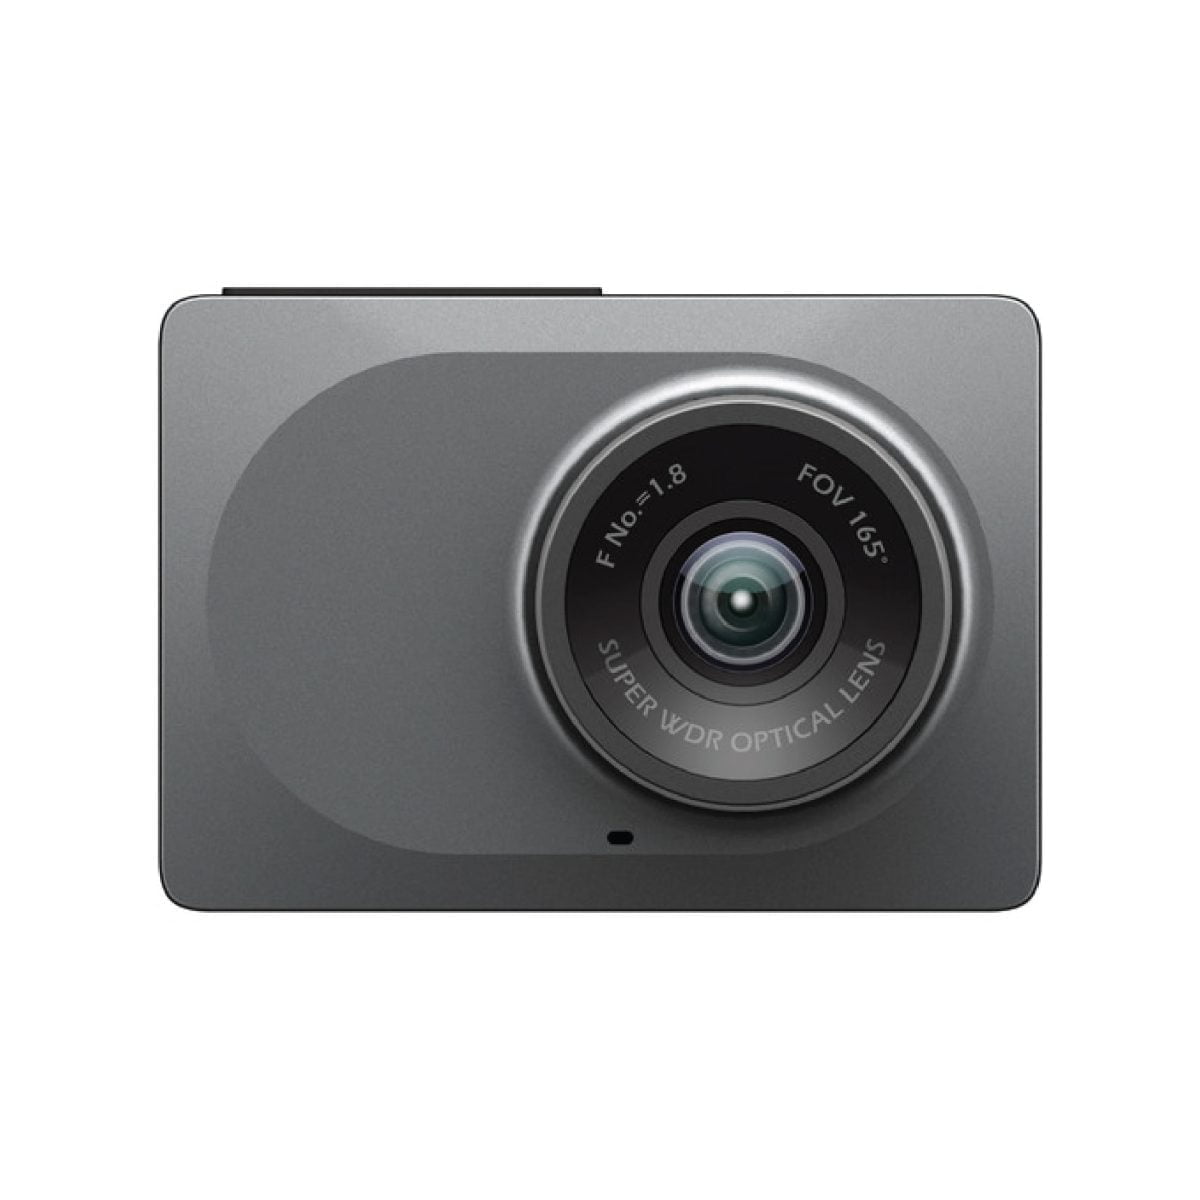 Yi Camera 07 شاومي &Lt;H1&Gt;Yi - كاميرا لوحة عدادات السيارة مدمجة مع شاشة 2.7 بوصة وعدسة 130 درجة Wdr ومستشعر G وتسجيل متكرر&Lt;/H1&Gt;
1080P60 Full Hd 165 زاوية عريضة وكاميرا لوحة القيادة الأمامية مسجل السيارة Dvr مع Adas ، G-Sensor ، تطبيق الهاتف ، Wdr ، تسجيل حلقة - رمادي Https://Youtu.be/Tsowlpdc0U4 Yi - سيارة كاميرا داش مدمجة ، كاميرا داش Yi - كاميرا لوحة عدادات السيارة مدمجة مع شاشة 2.7 بوصة وعدسة 130 درجة Wdr ومستشعر G وتسجيل متكرر